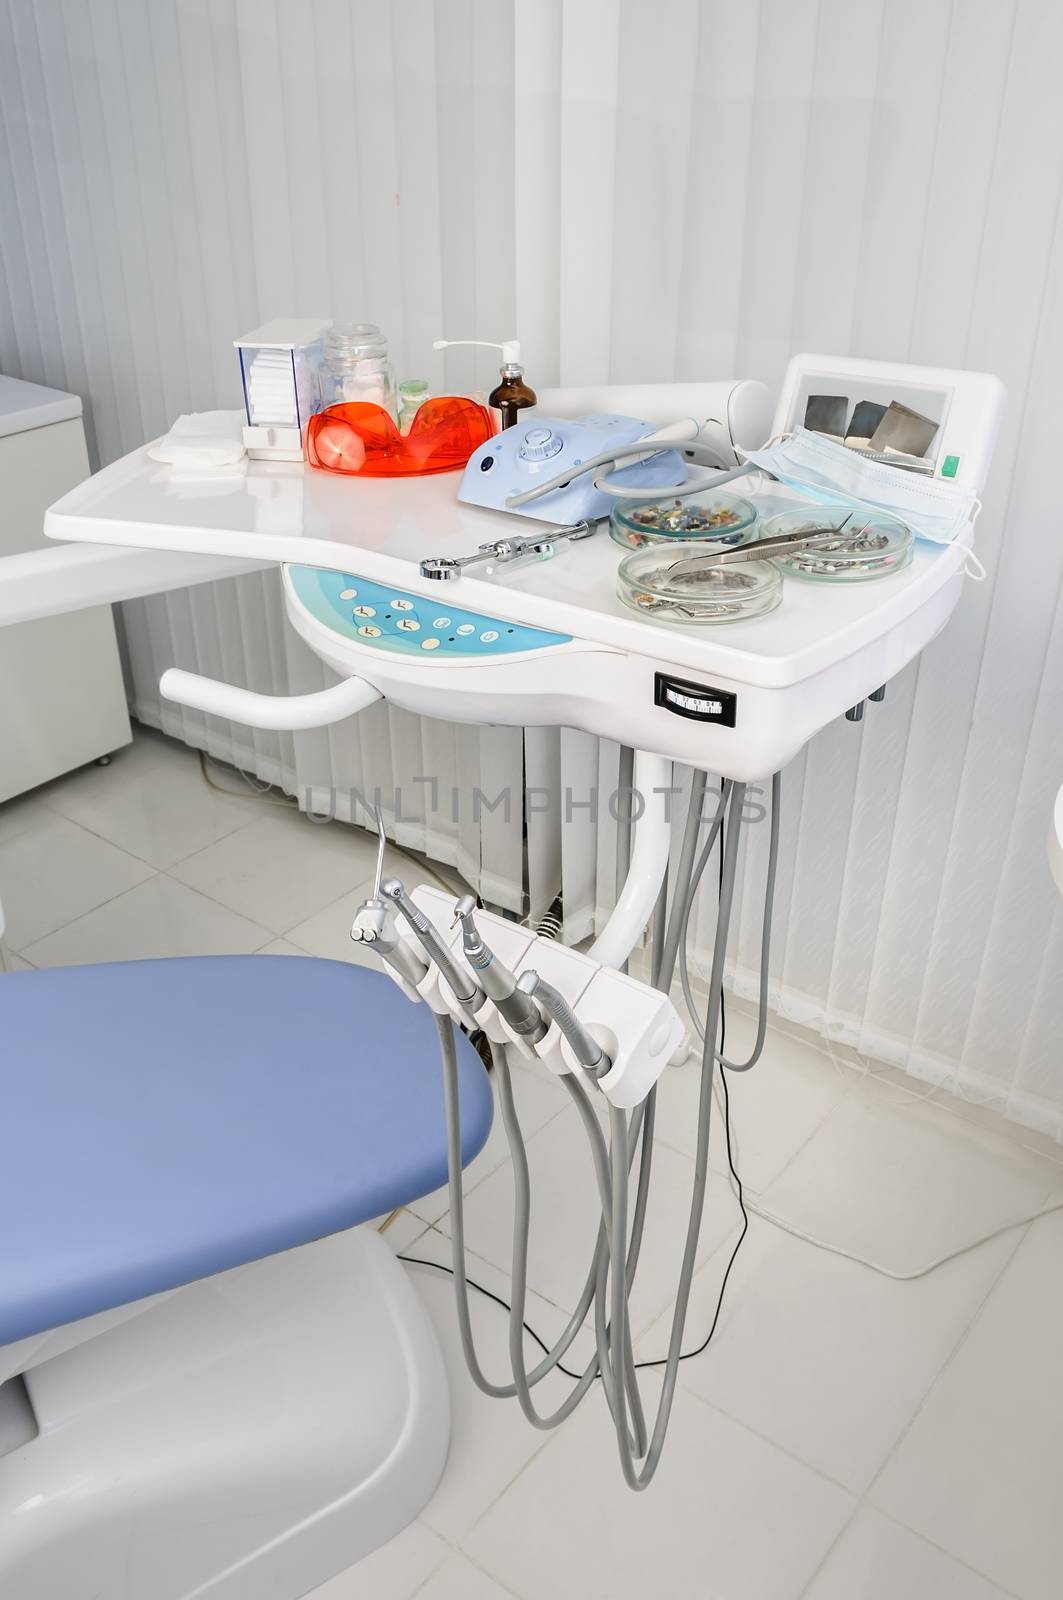 Dental office, medical equipment by starush